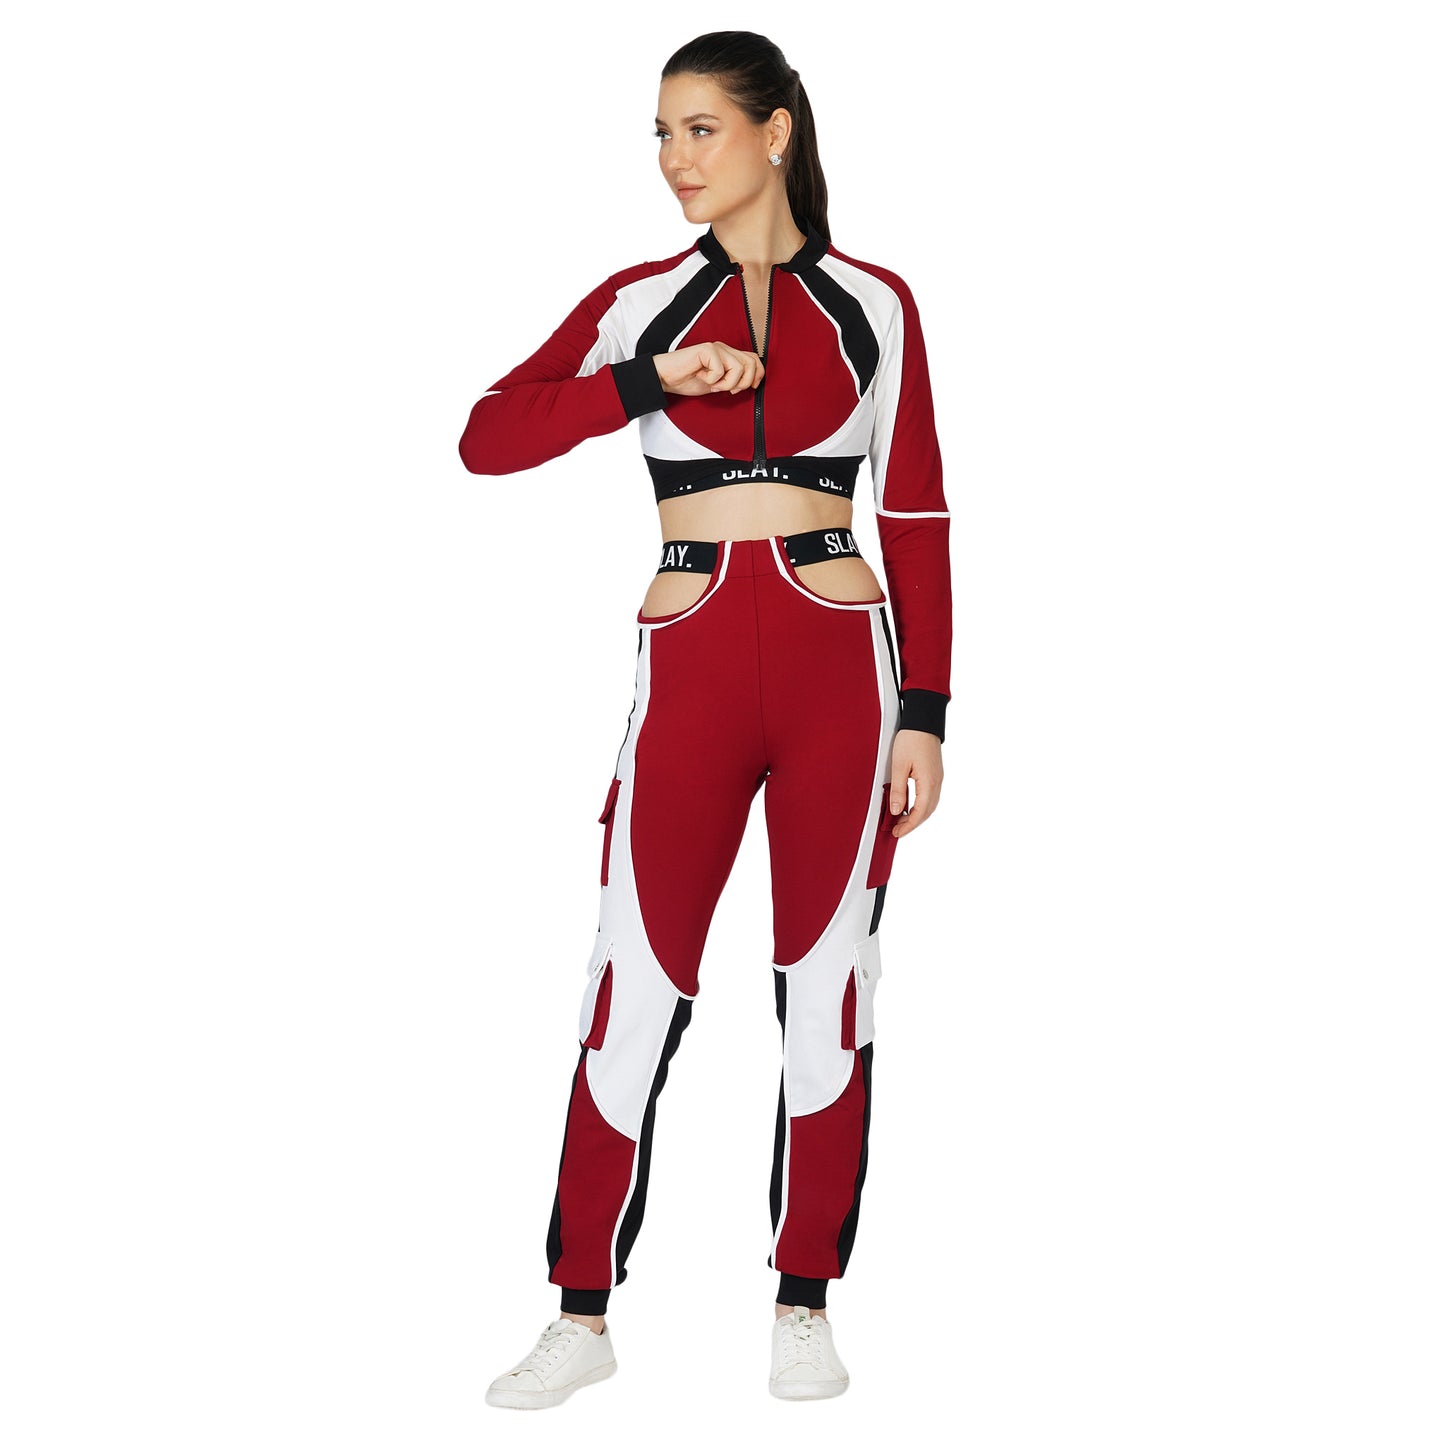 SLAY. Women's Activewear Tracksuit Red Colorblock Crop Jacket & High waist Cargo Pants Co-ord set Streetwear